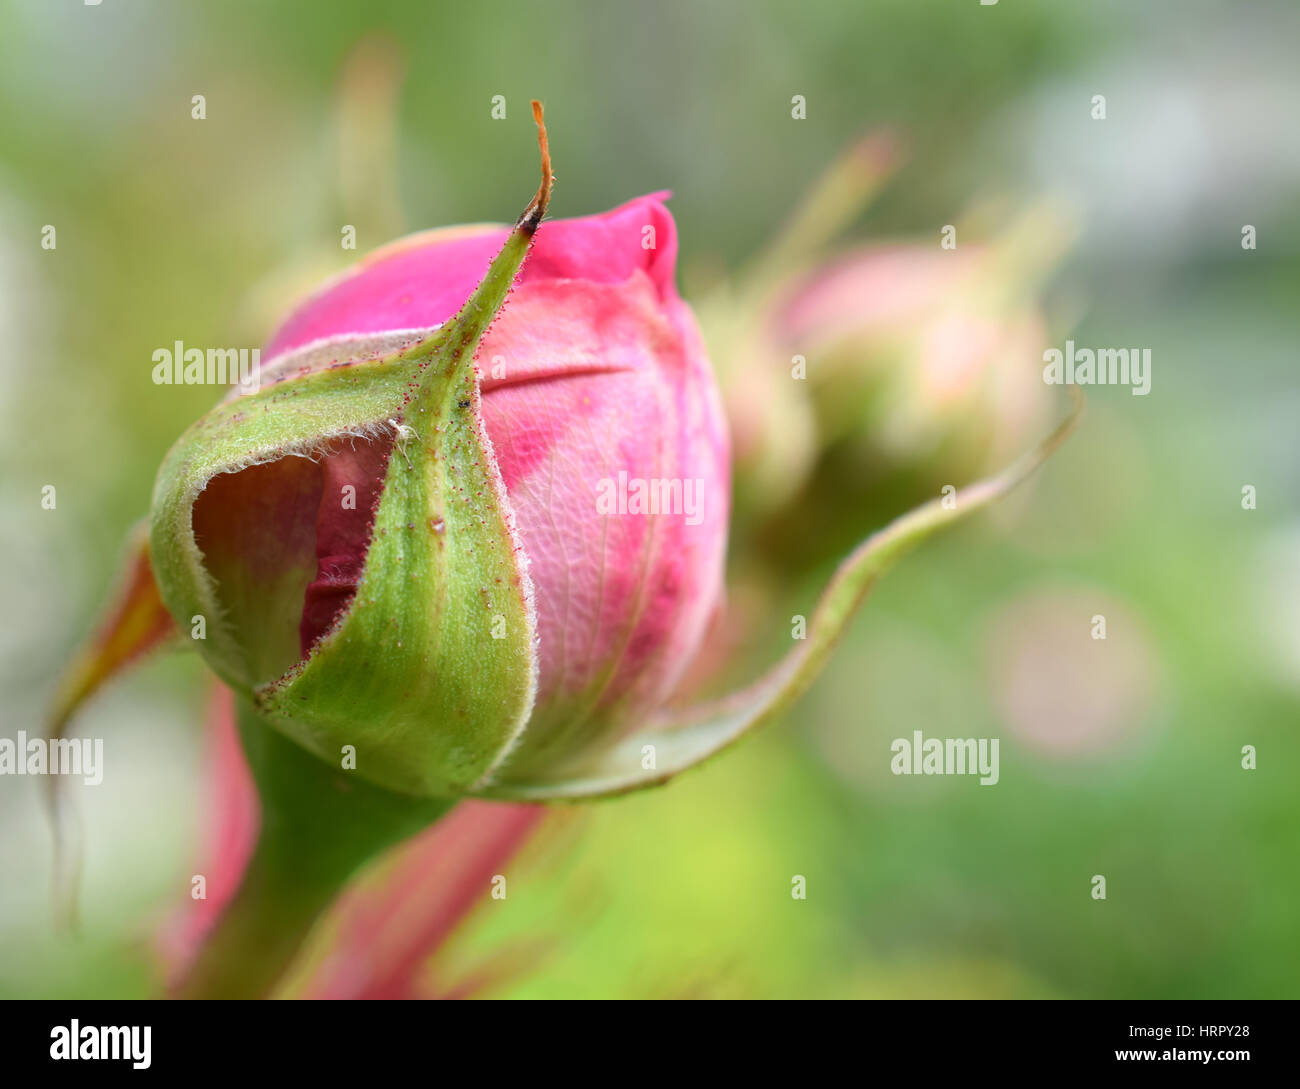 Rose bud david austin hi-res stock photography and images - Alamy